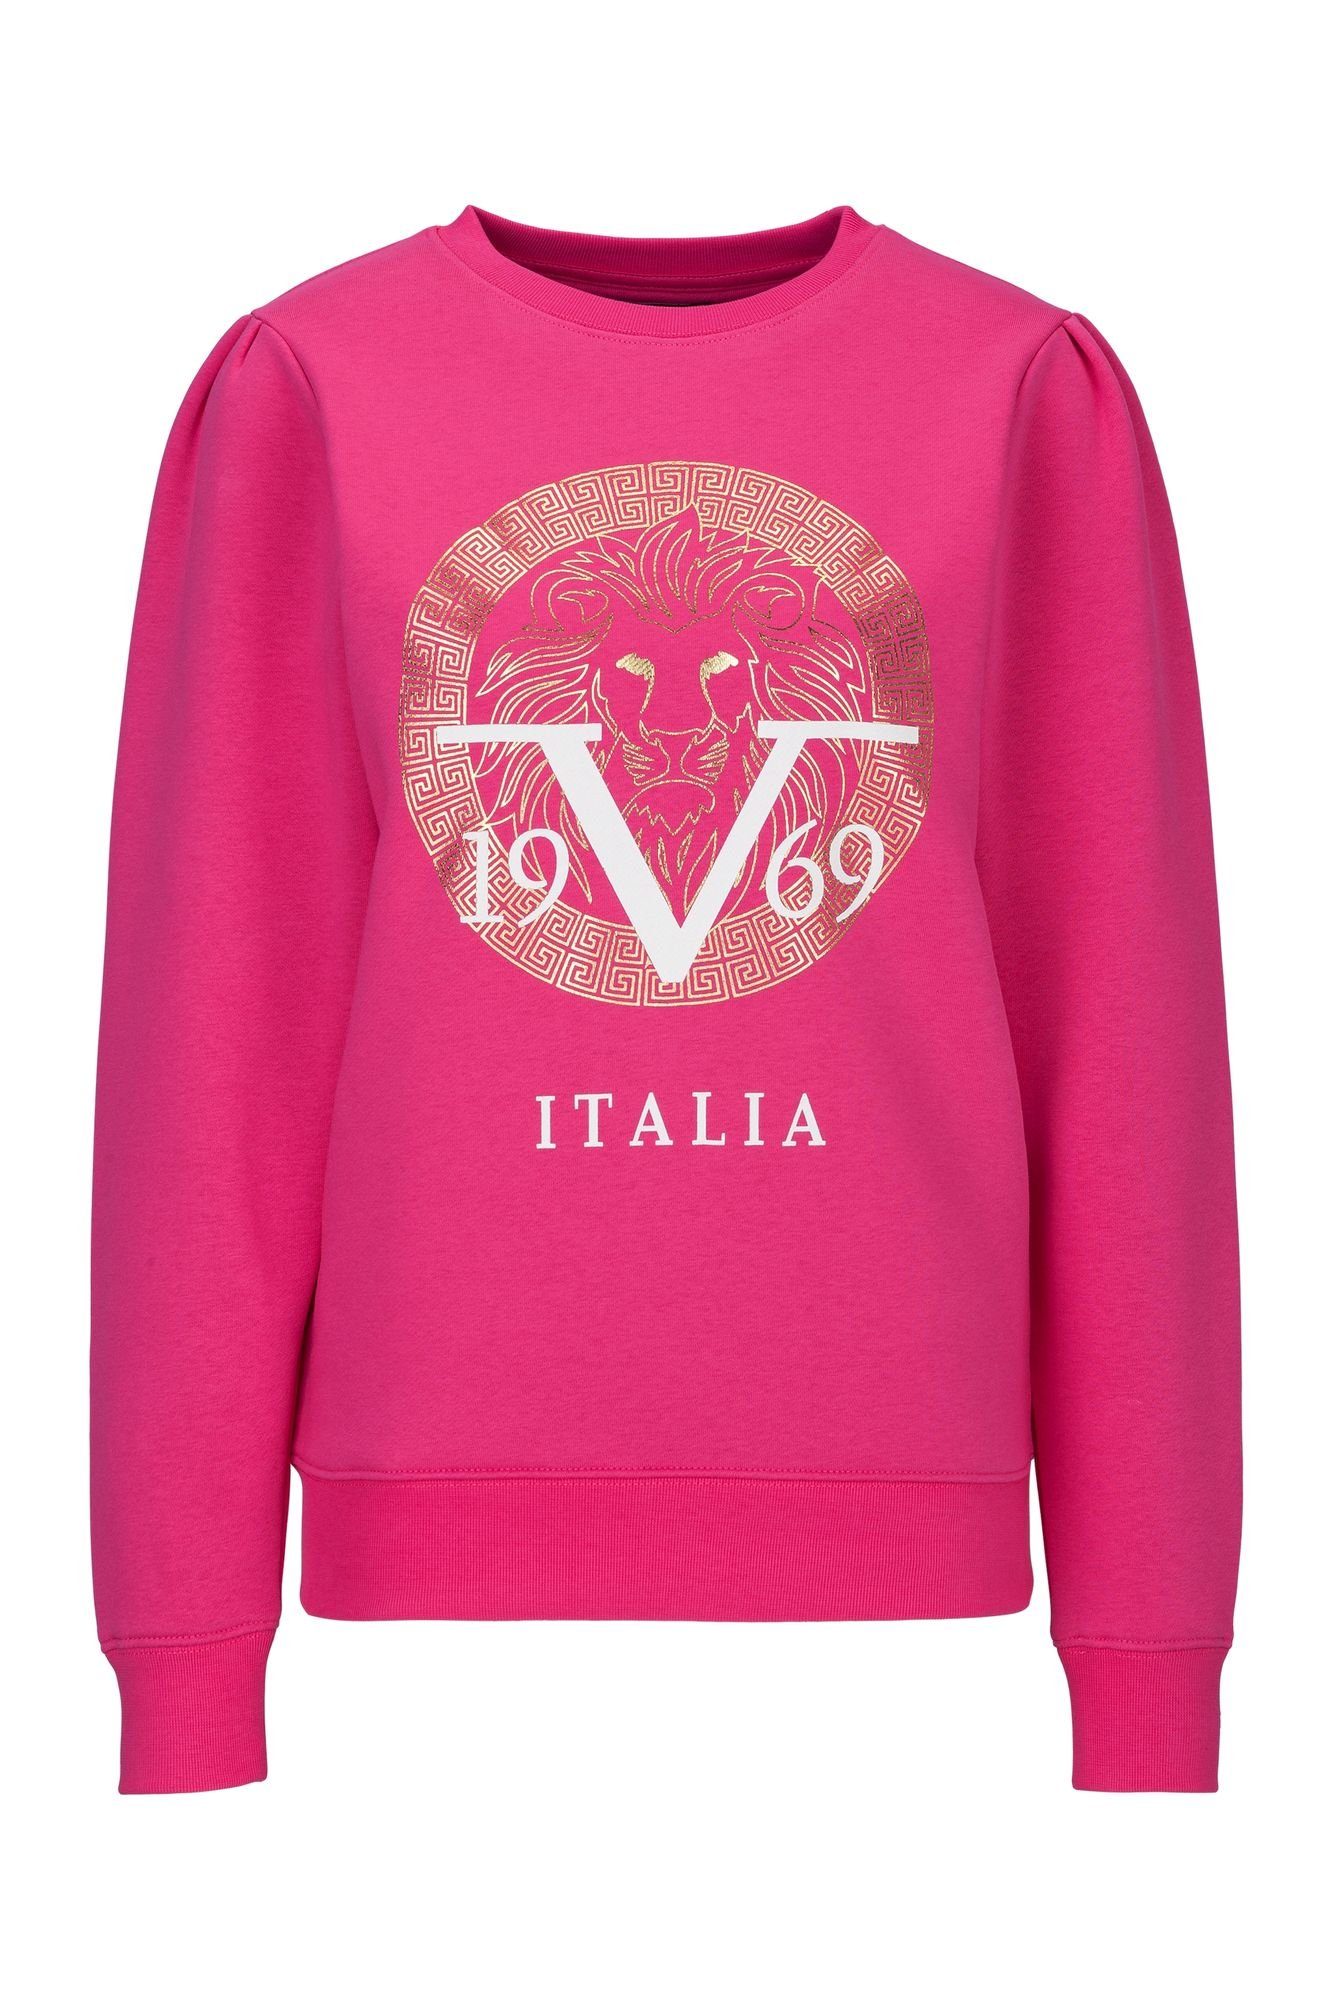 19V69 Italia Erika Sweatshirt by Versace